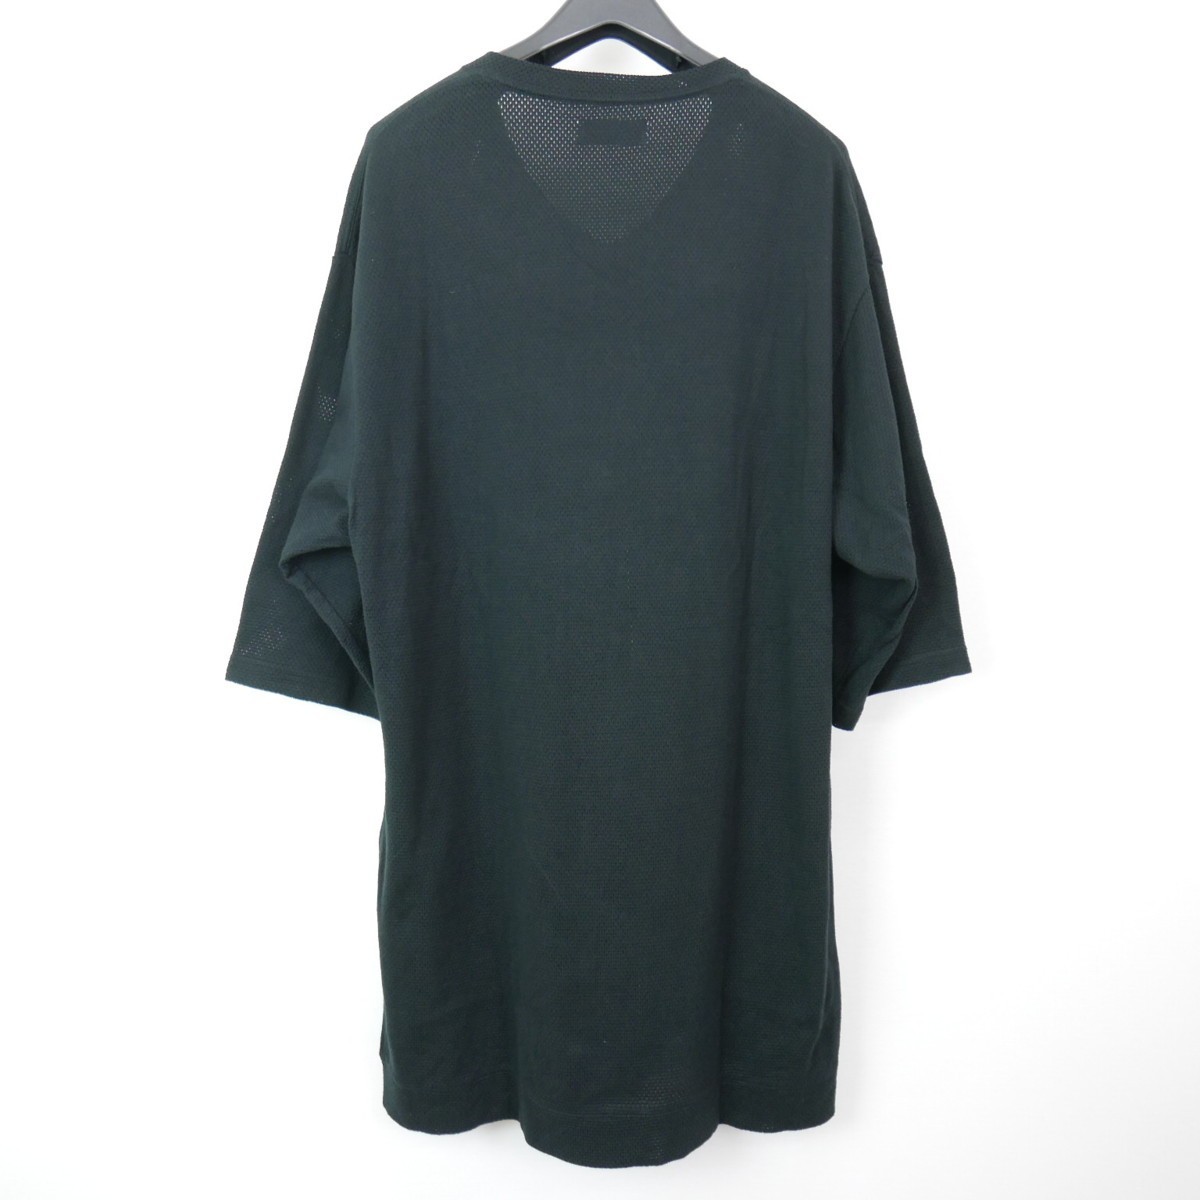 19SS markama-kaV-NECK Tee S/S хлопок короткий рукав одноцветный V шея вязаный cut and sewn футболка BLACK 2